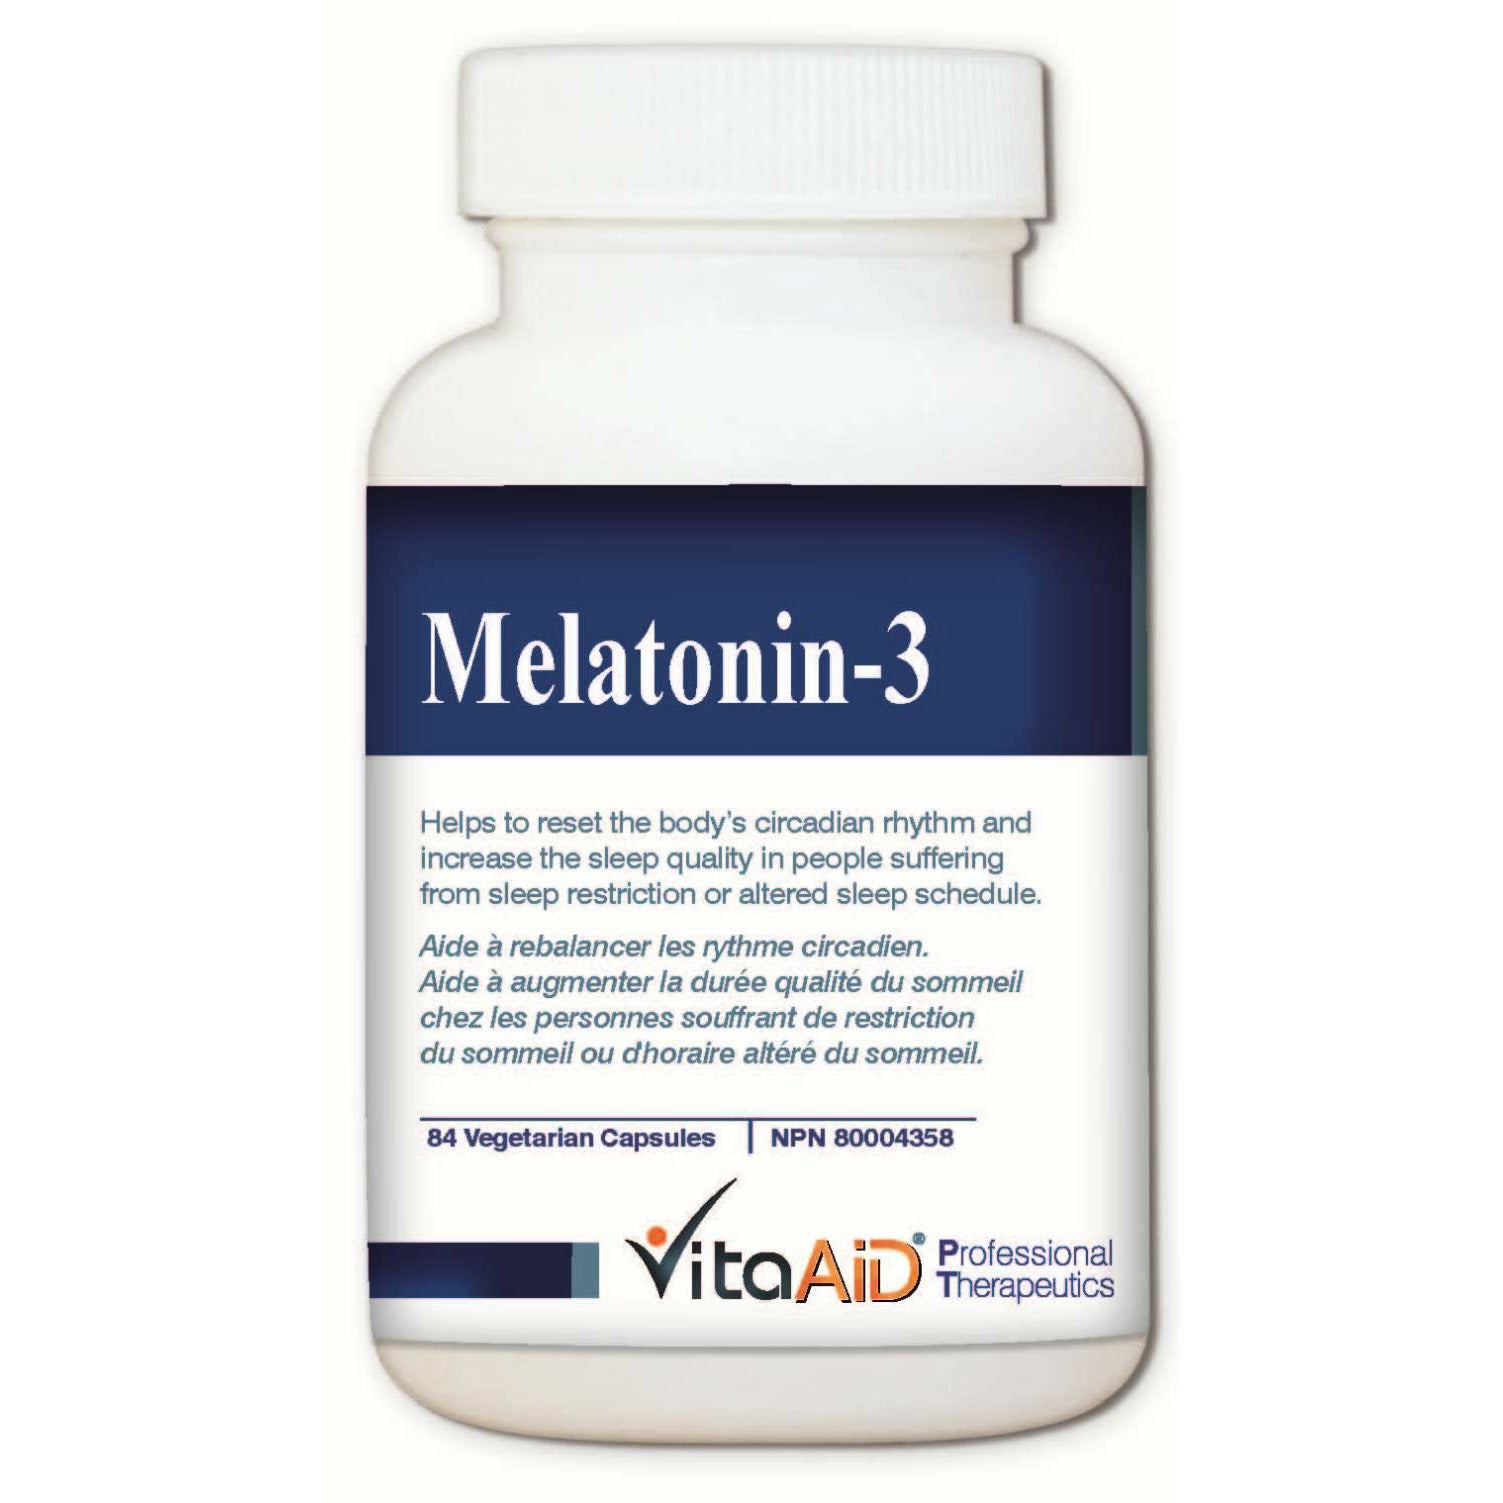 Melatonin-3 Restores Body's Circadian Rhythm 84 veg caps